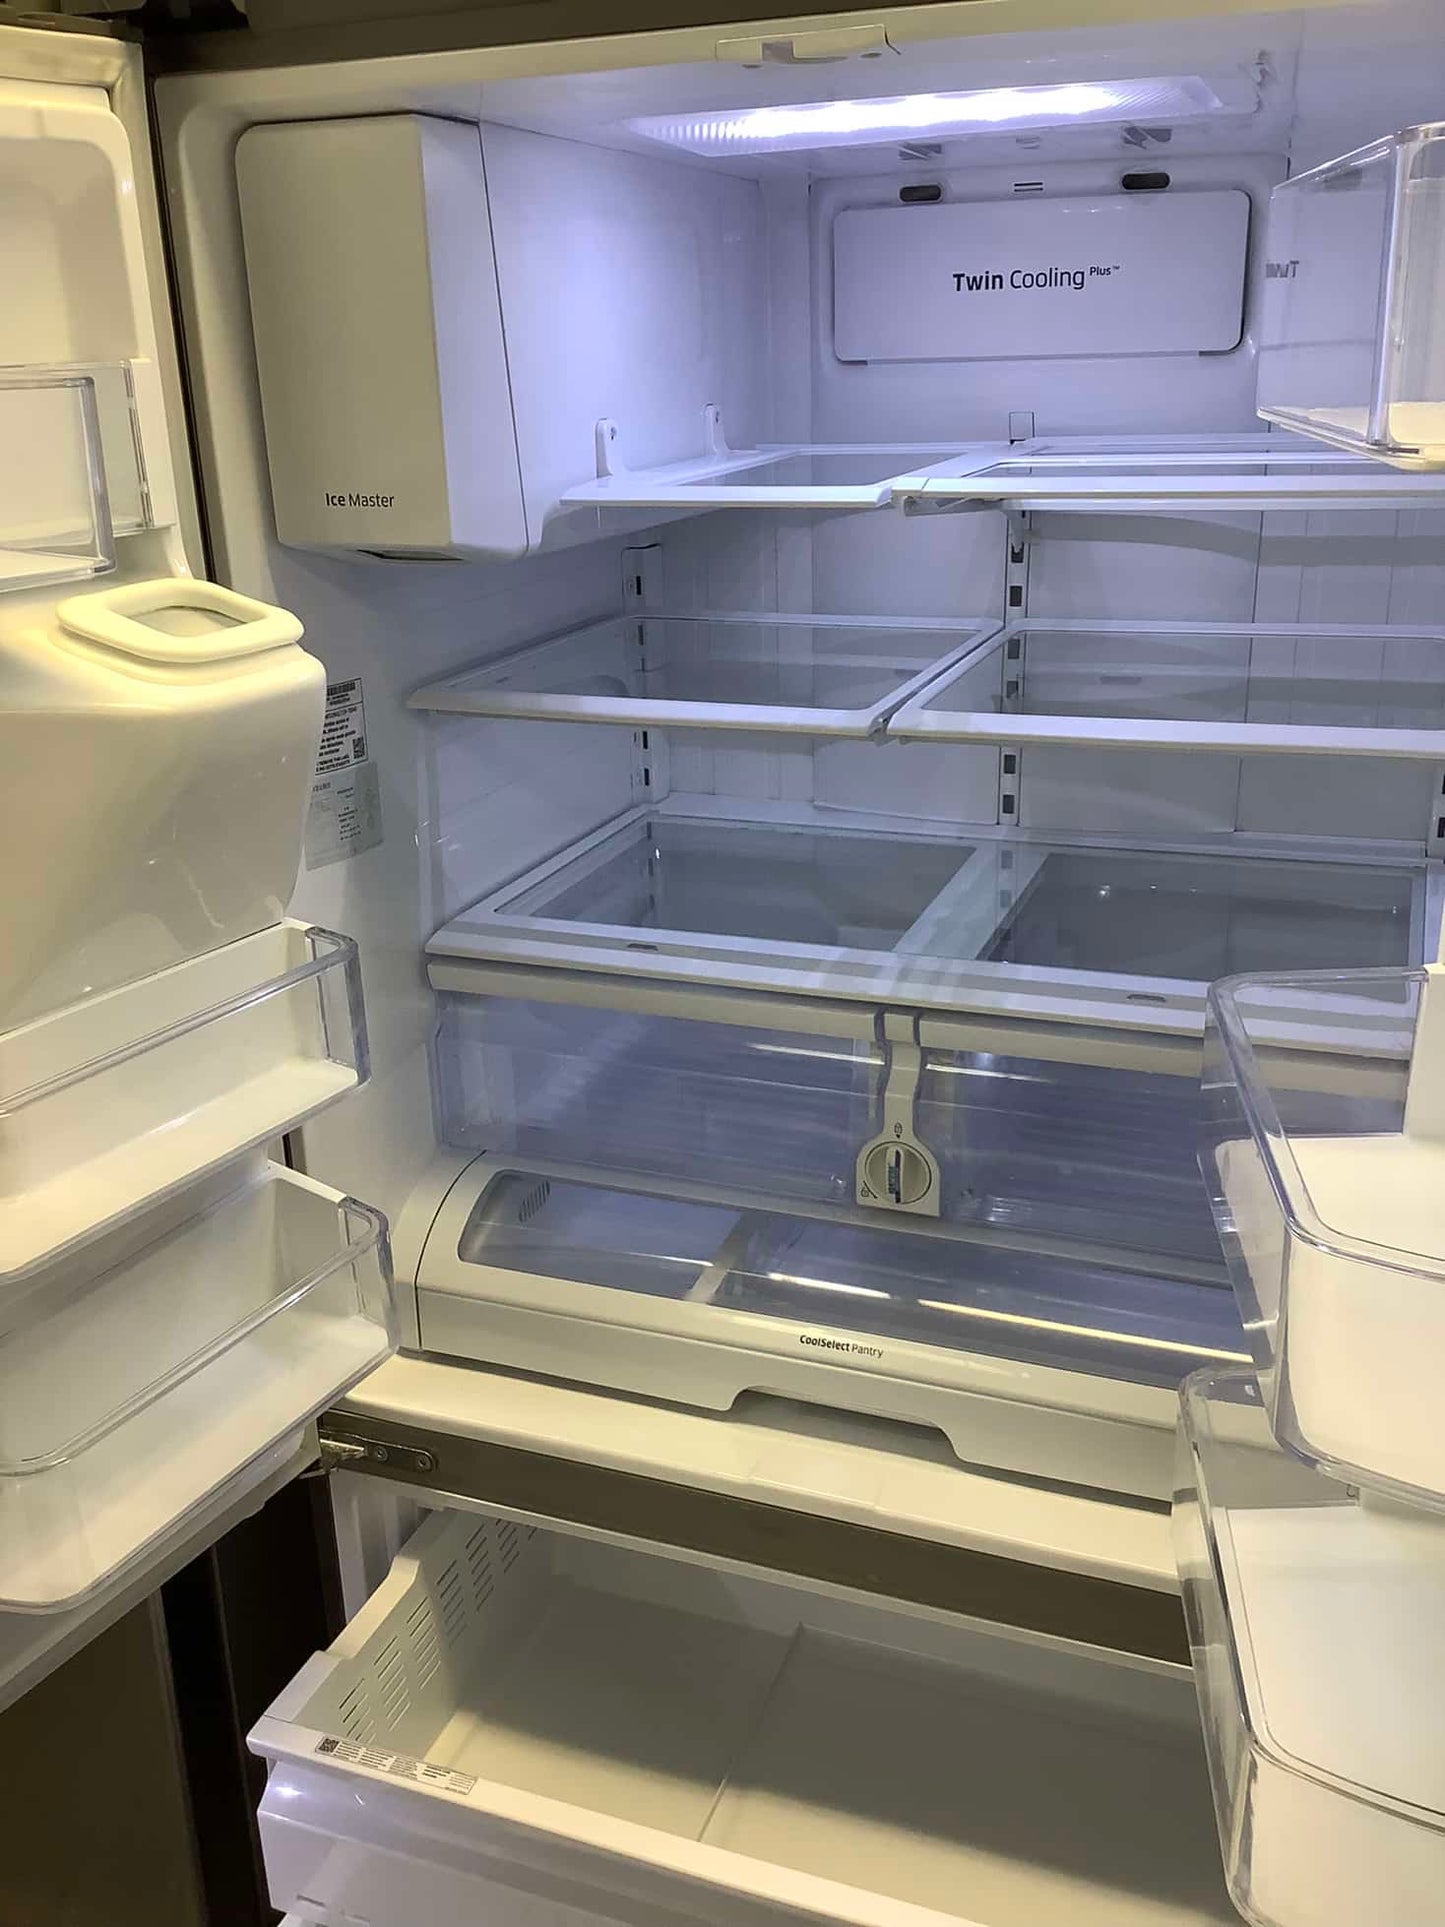 Samsung French door refrigerator stainless steel w/water ice dispenser 36 in